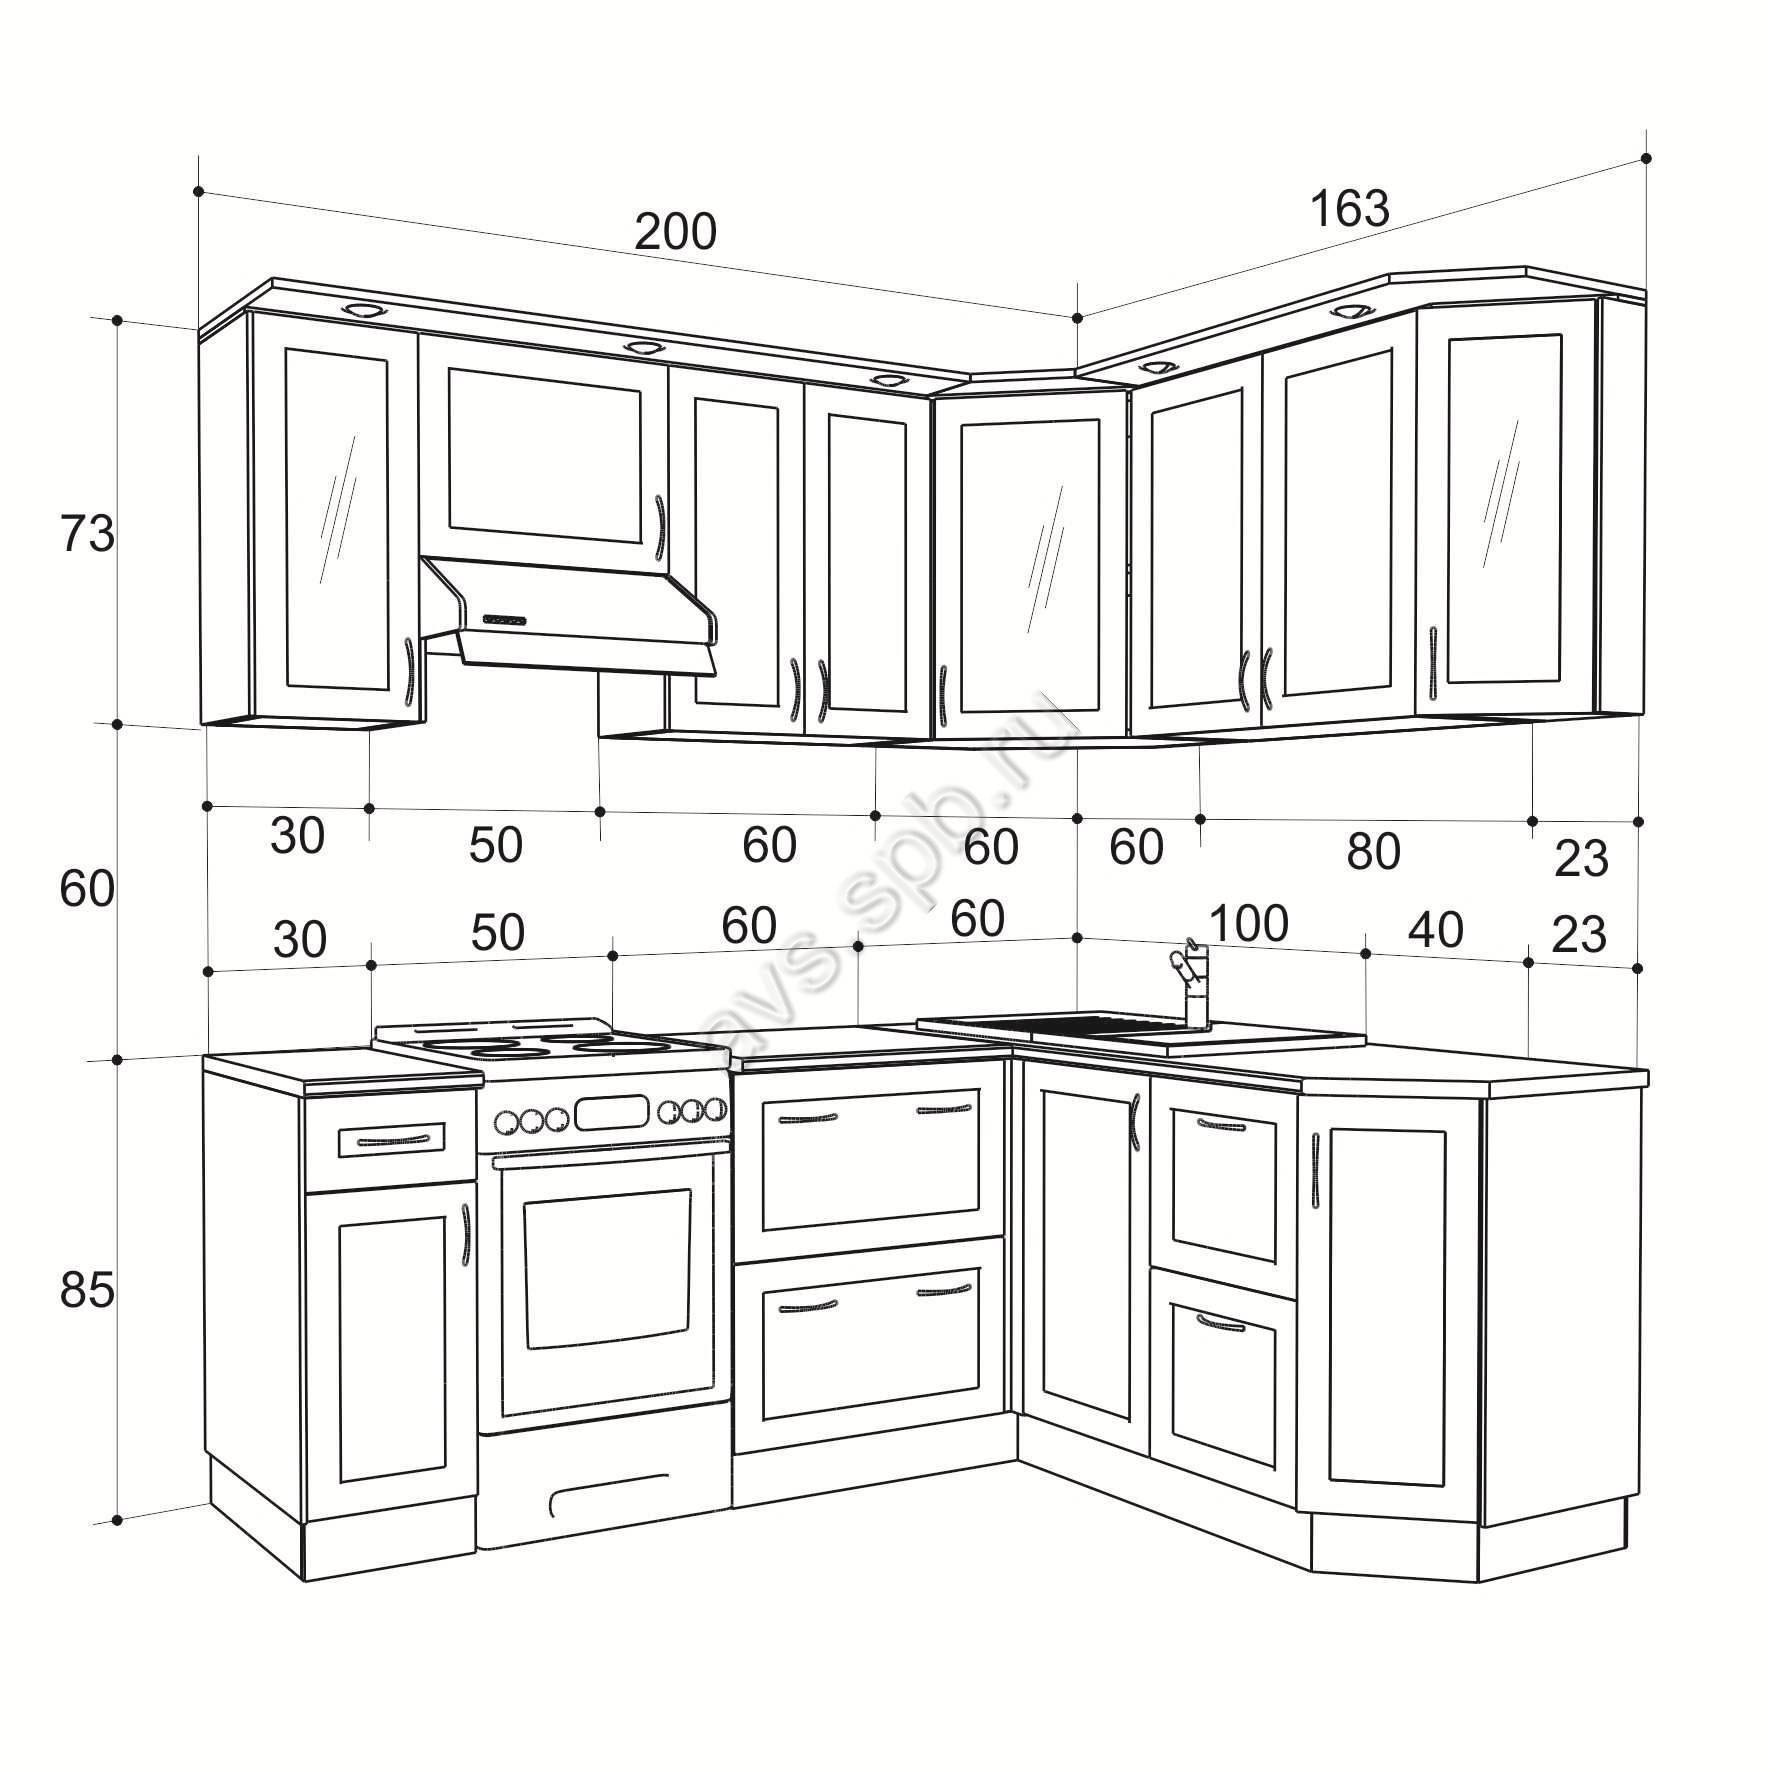 Размеры кухонных шкафов: стандарт, высота, глубина, ширина